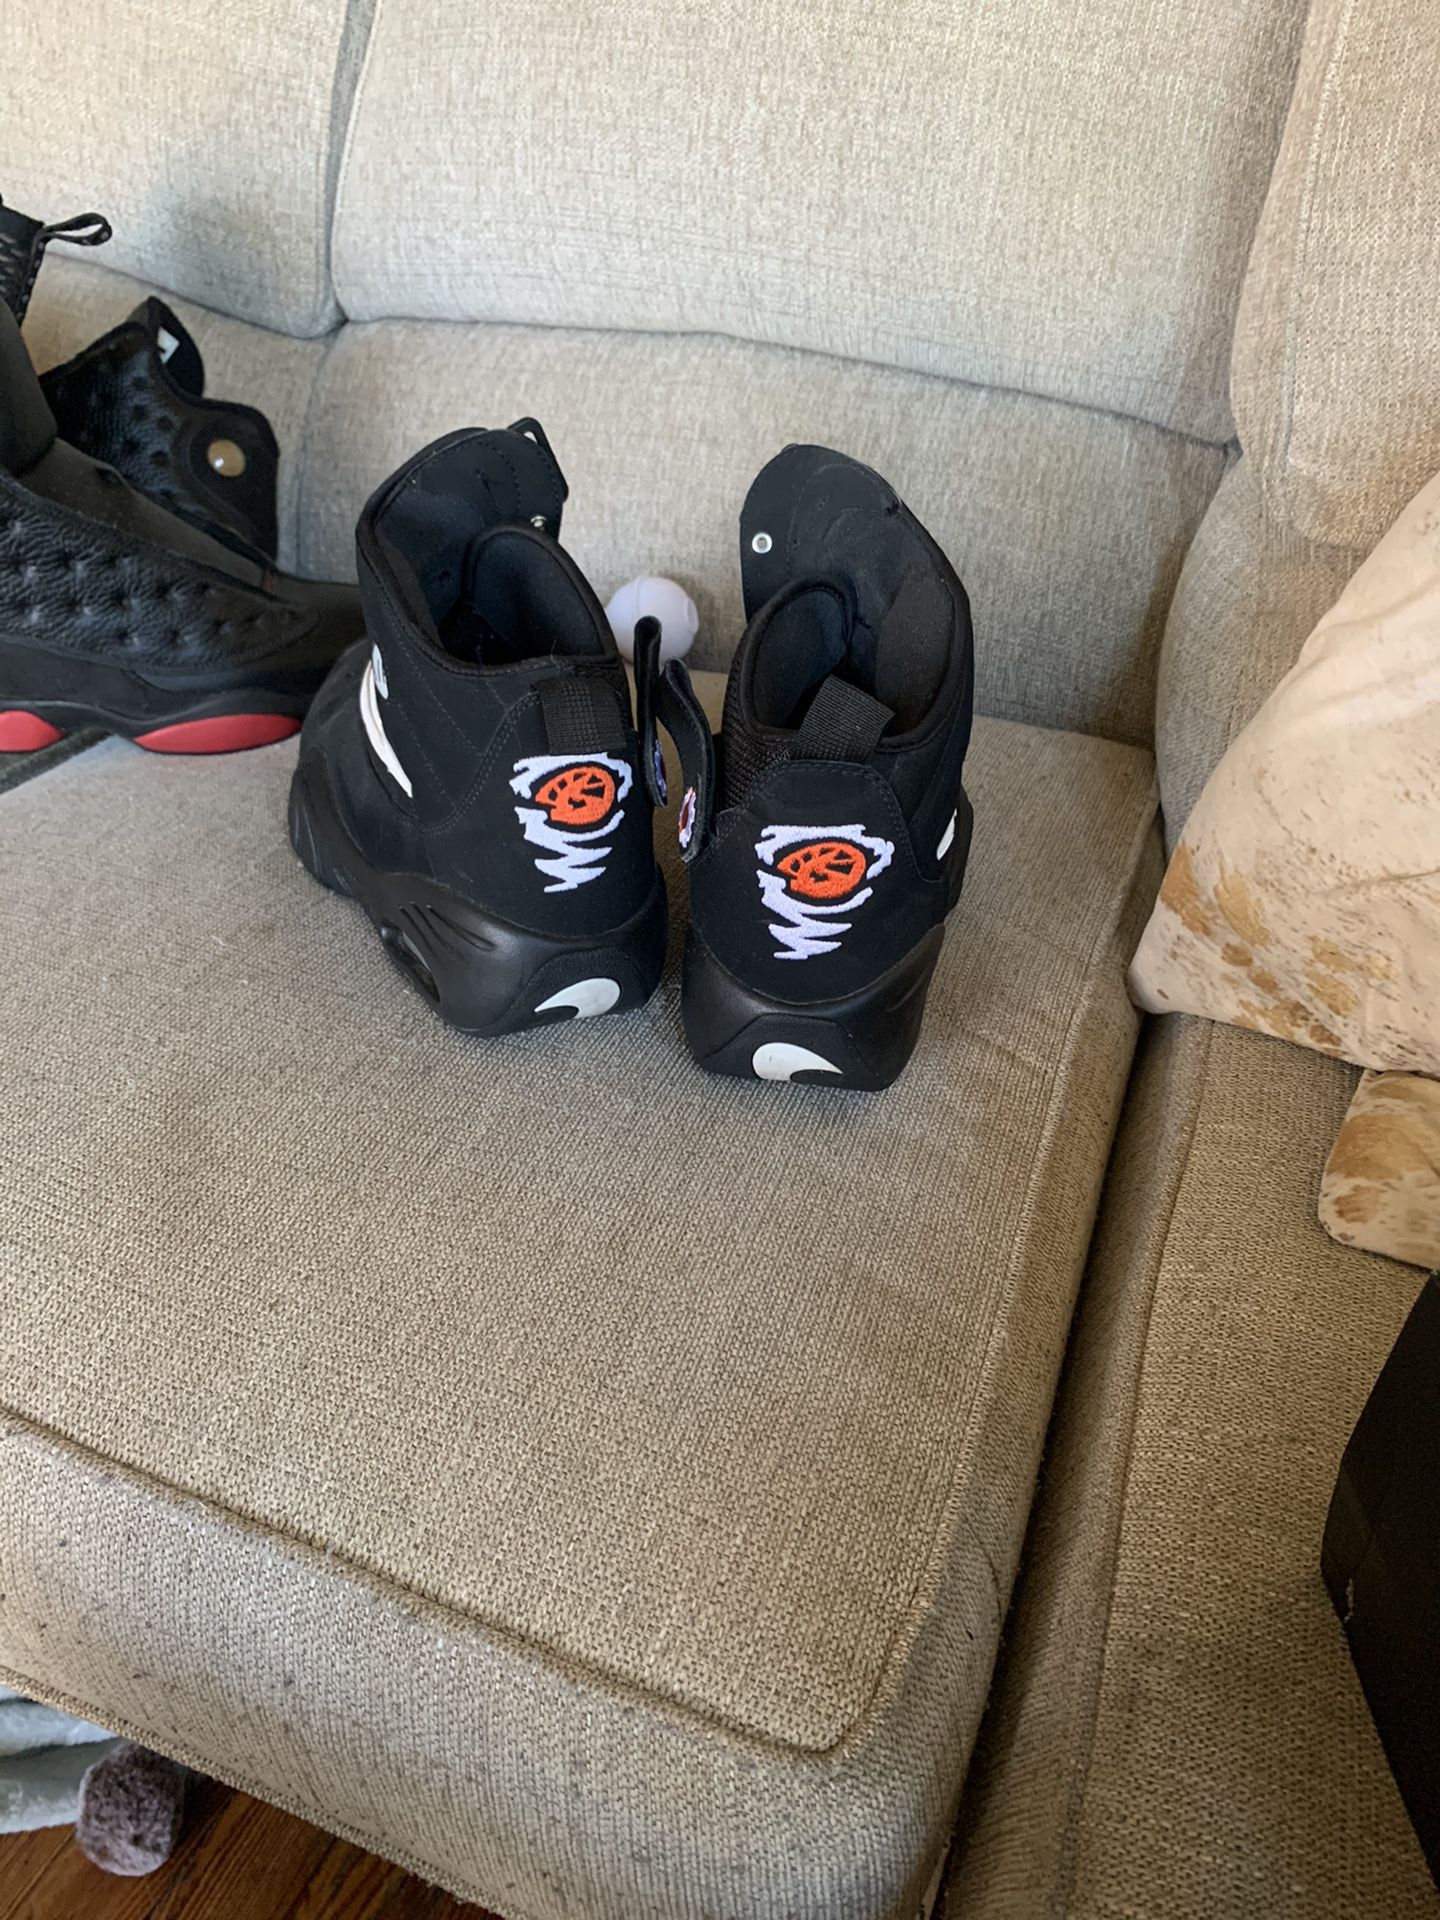 Dennis Rodman Nike size 13